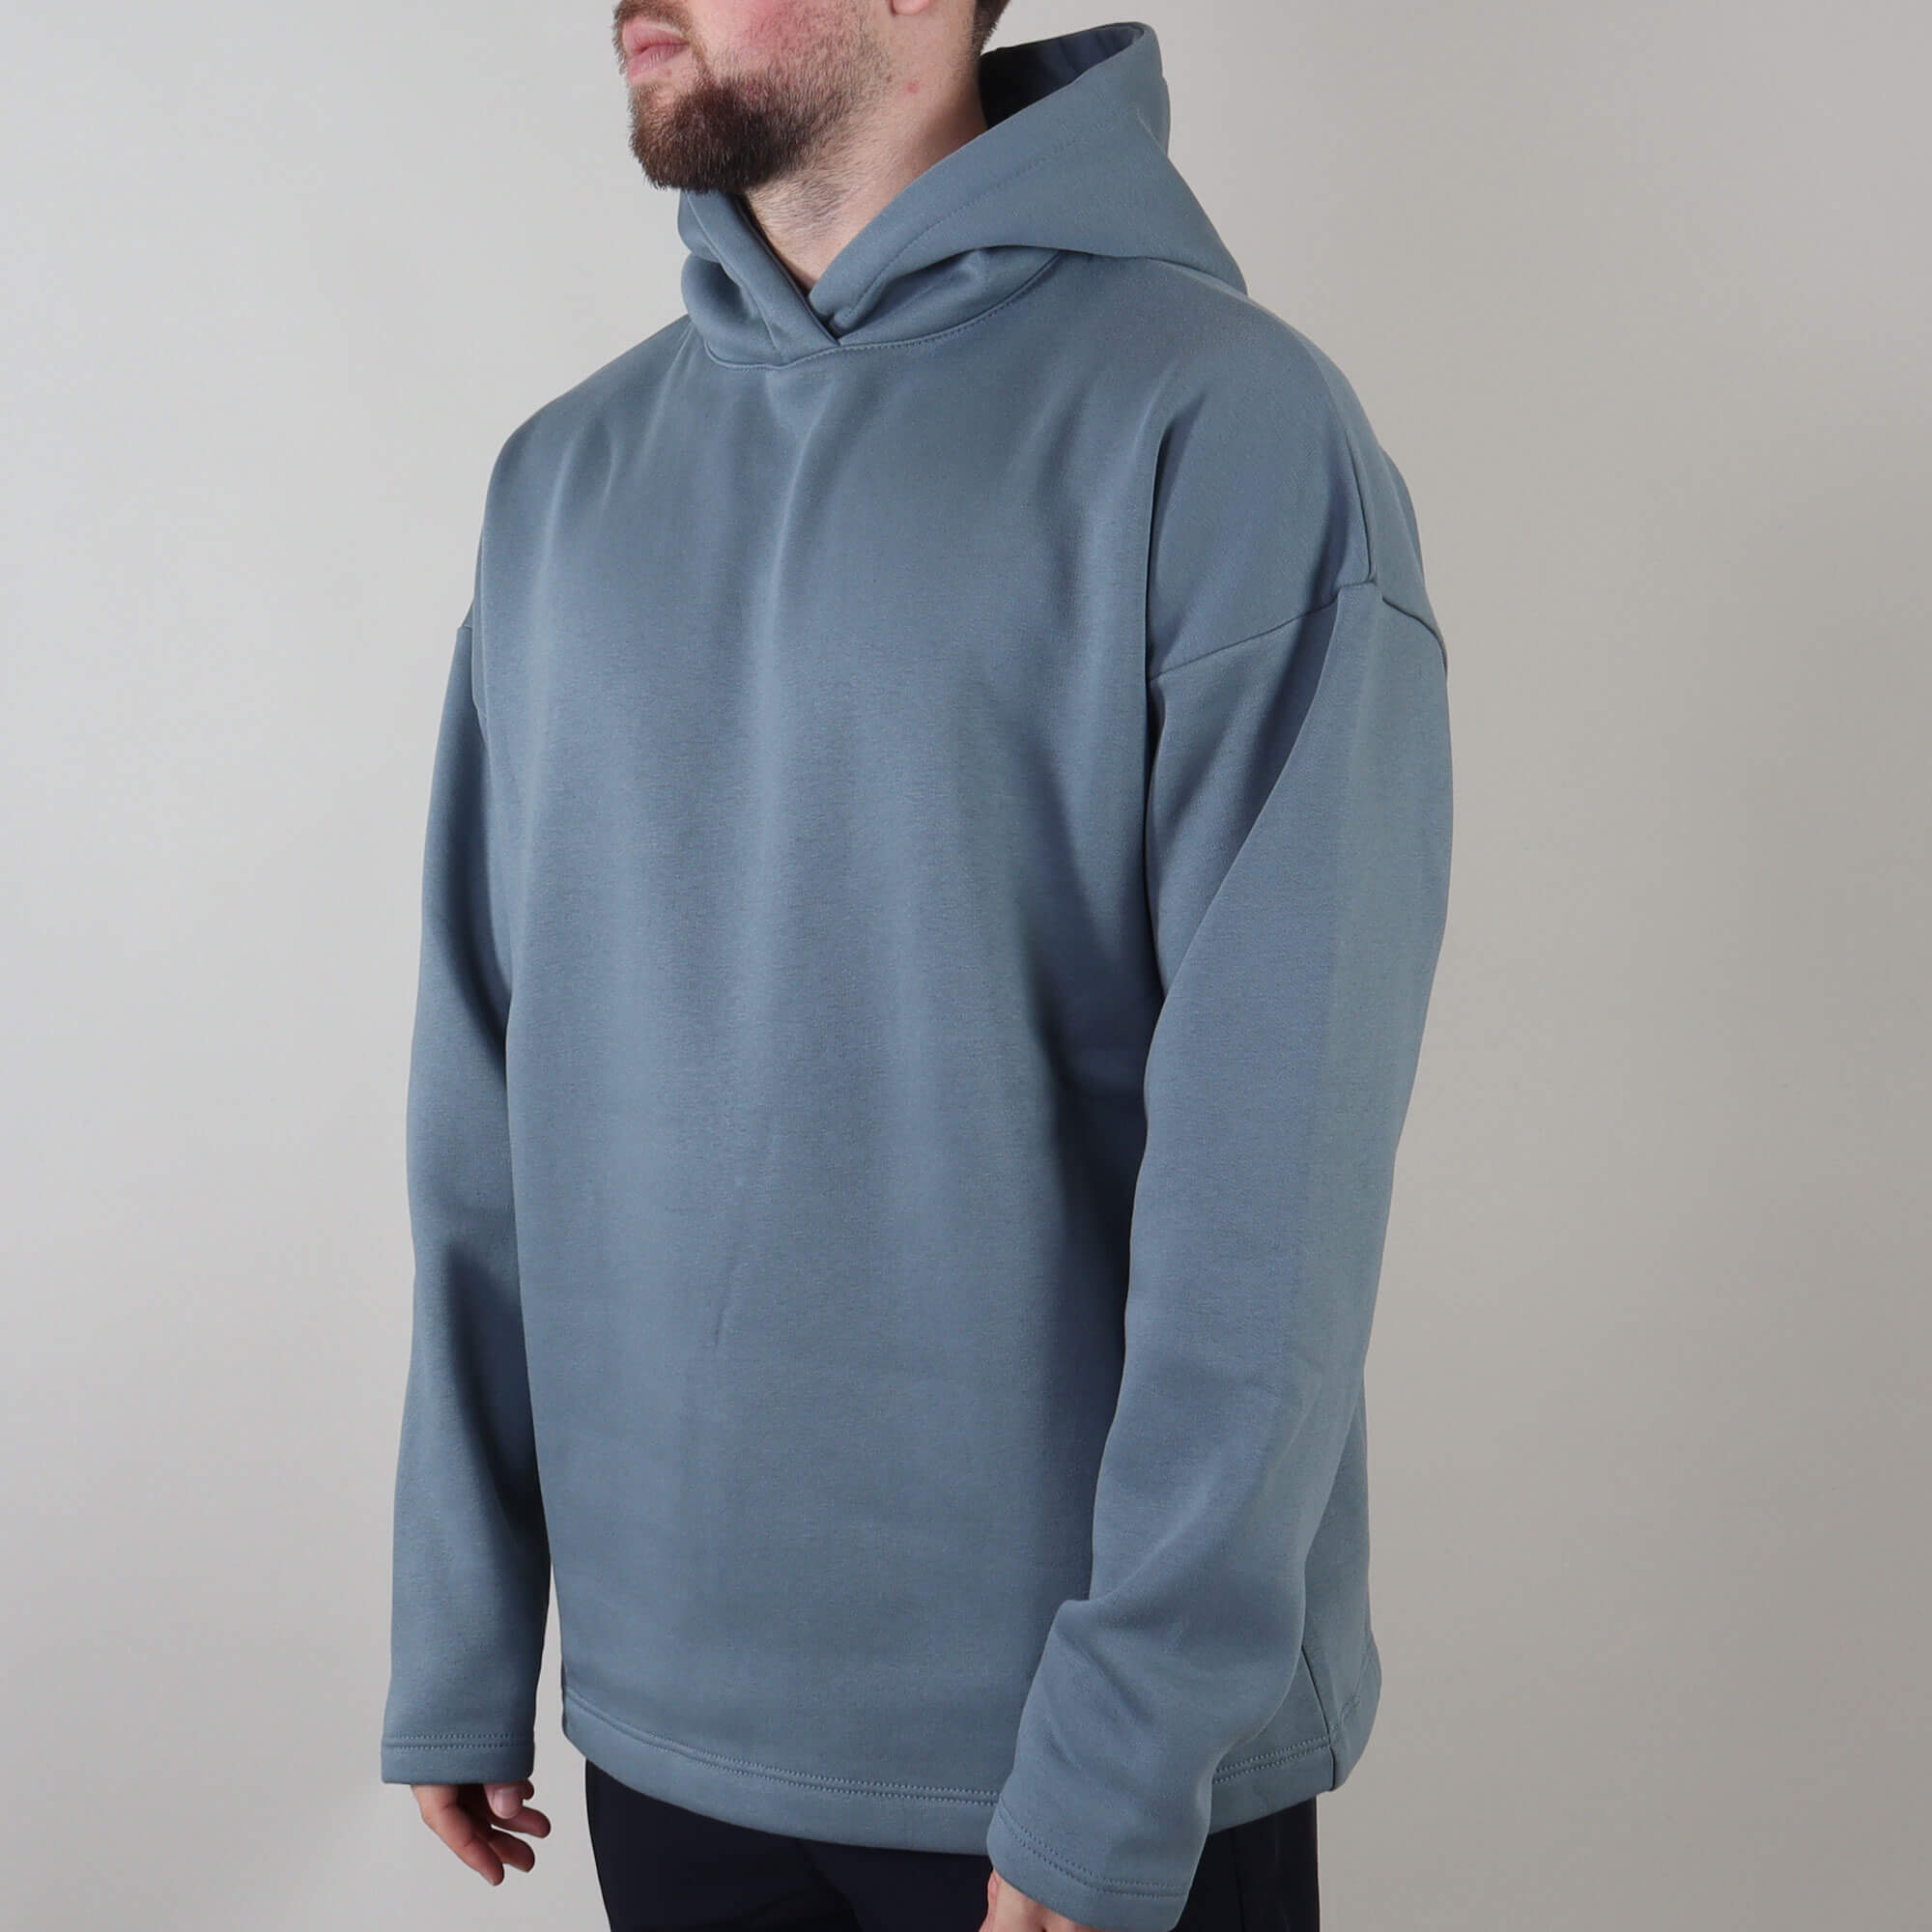 PRJCT hoodie light blue